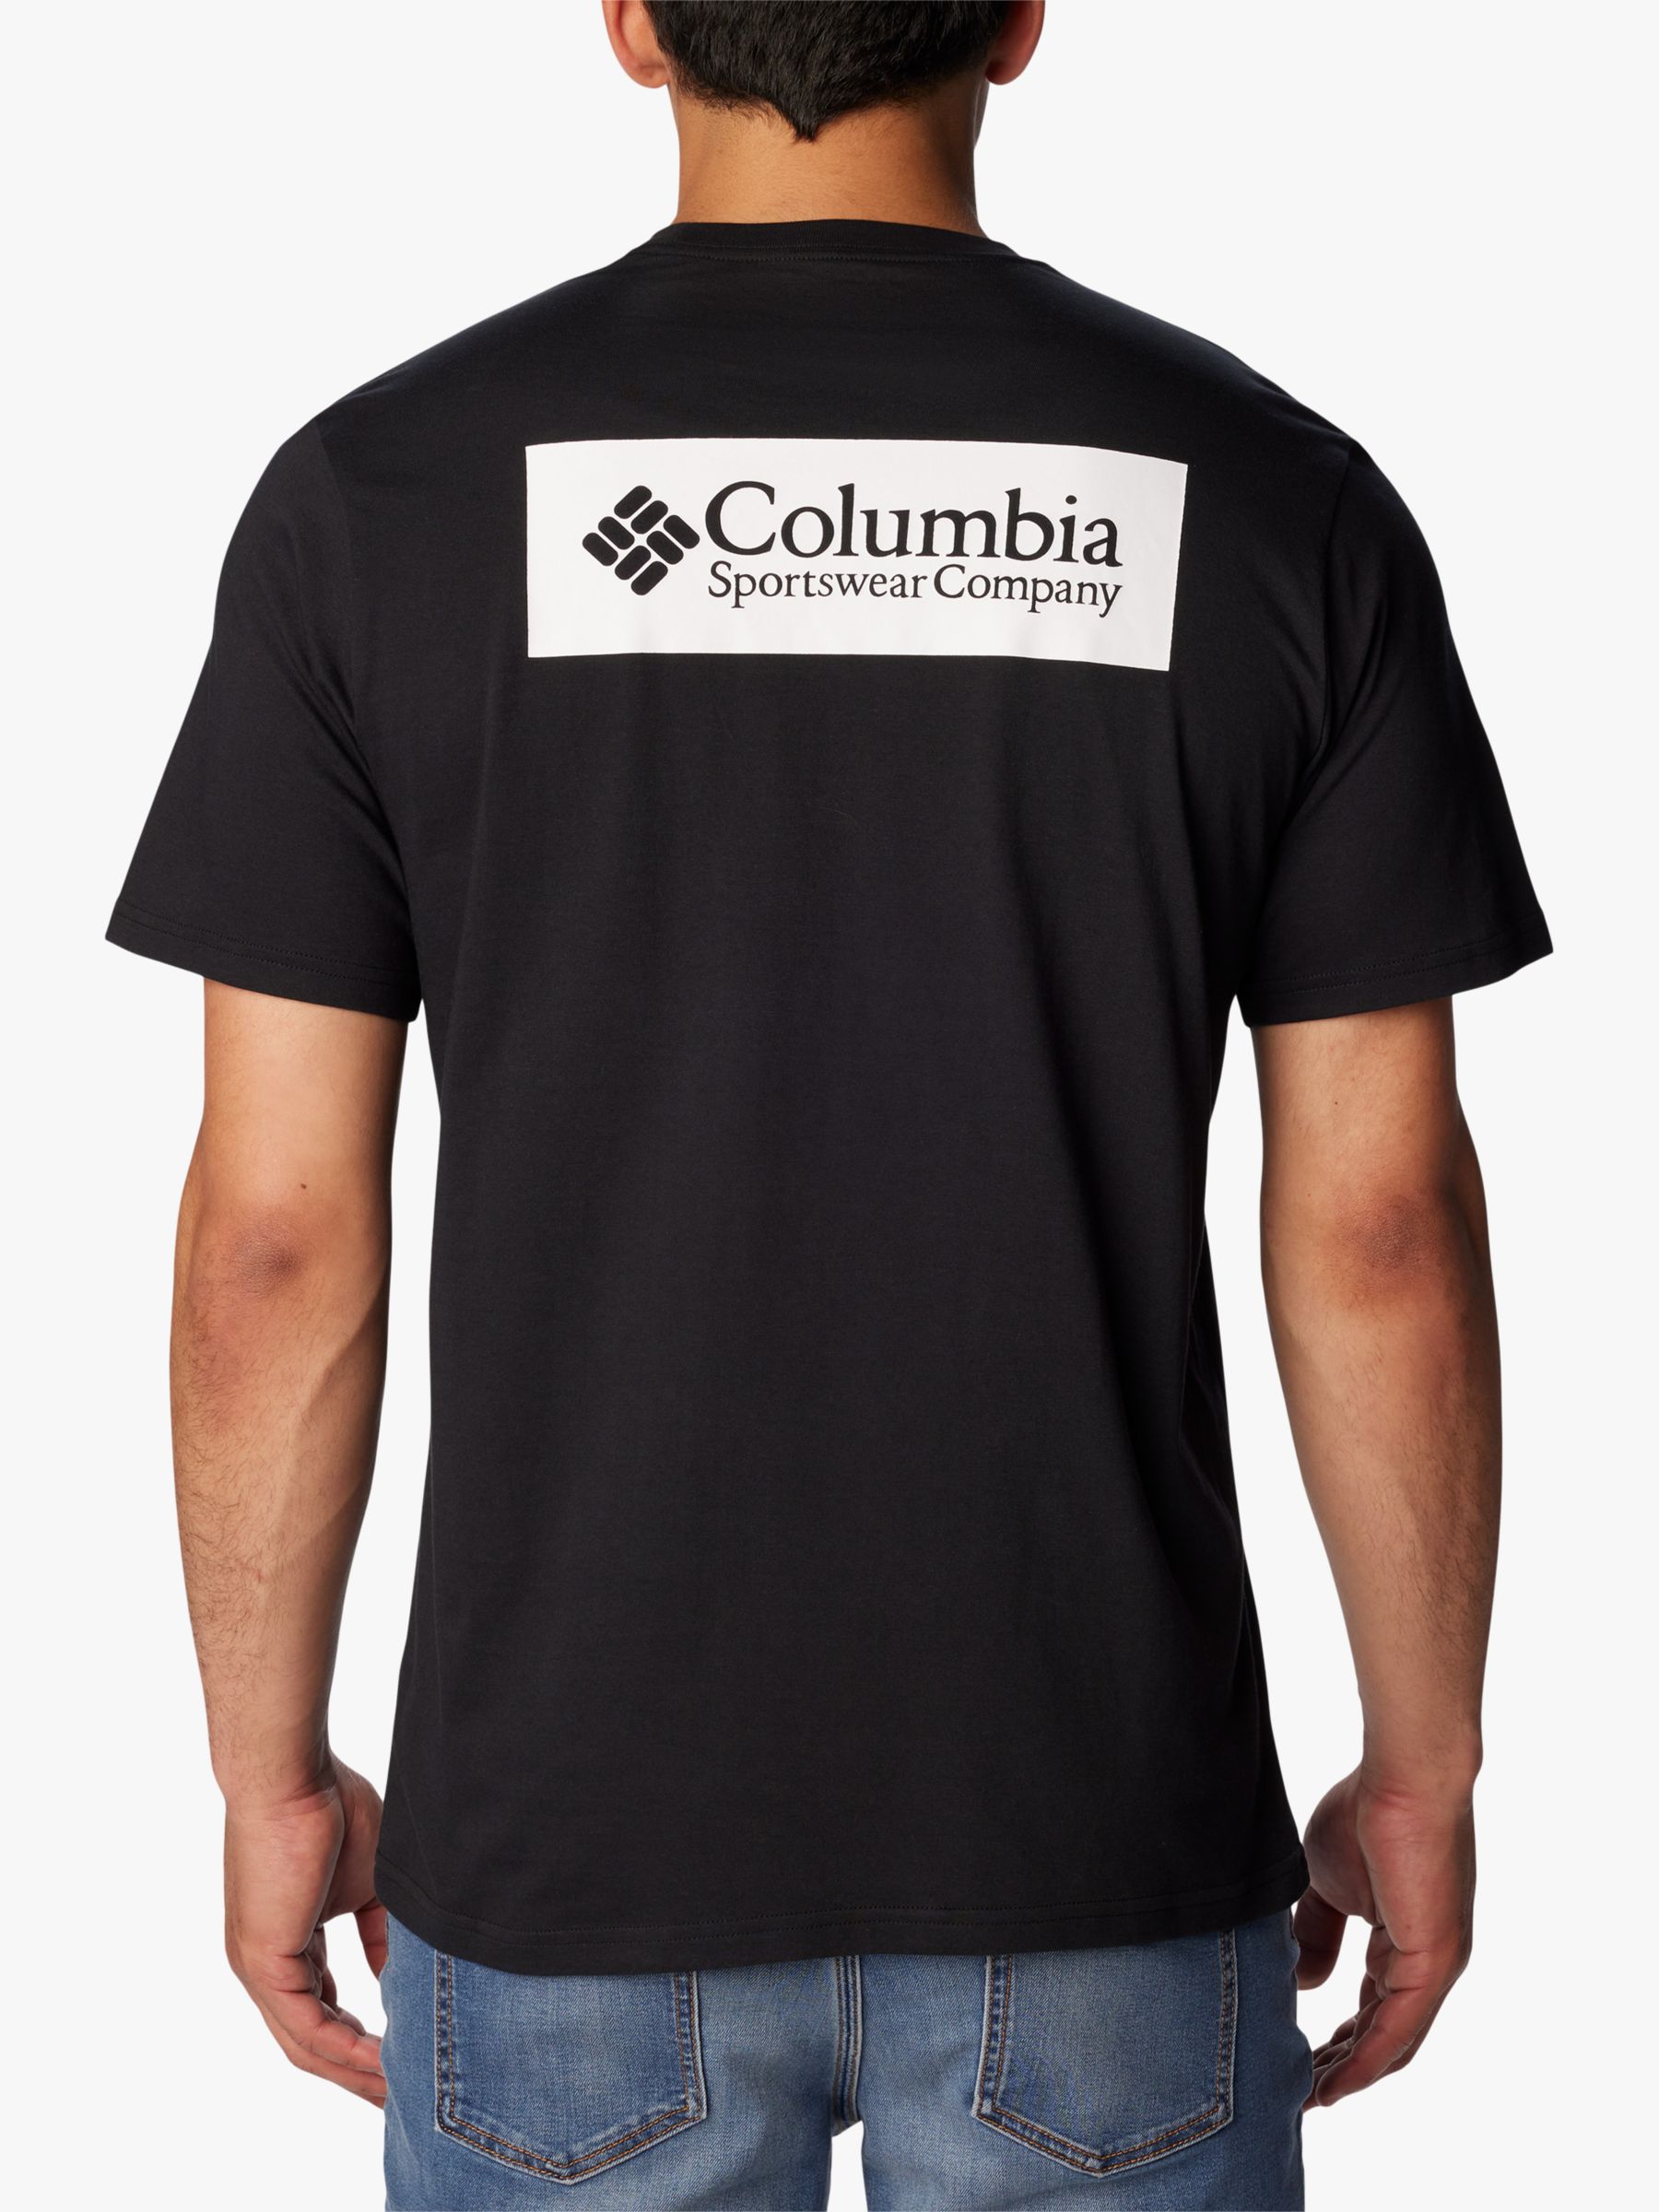 Columbia North Cascades Cotton T-shirt, Black, XL